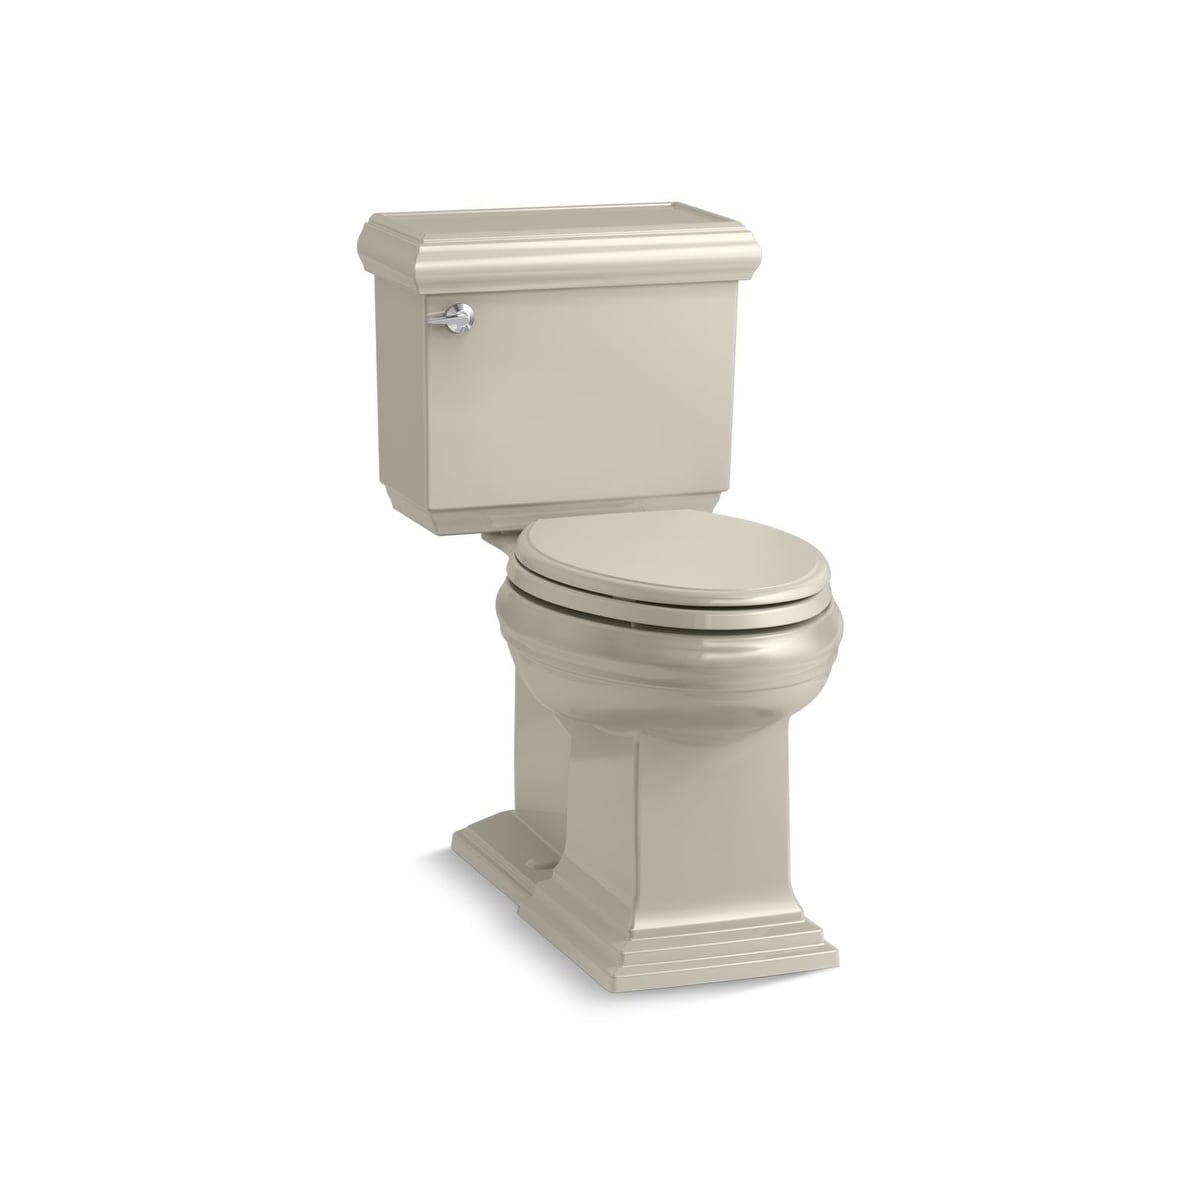 Kohler K-6999 Memoirs Classic Comfort Height Two-Piece Elongated 1.28 GPF Toilet With AquaPiston Flush Technology, Less Seat